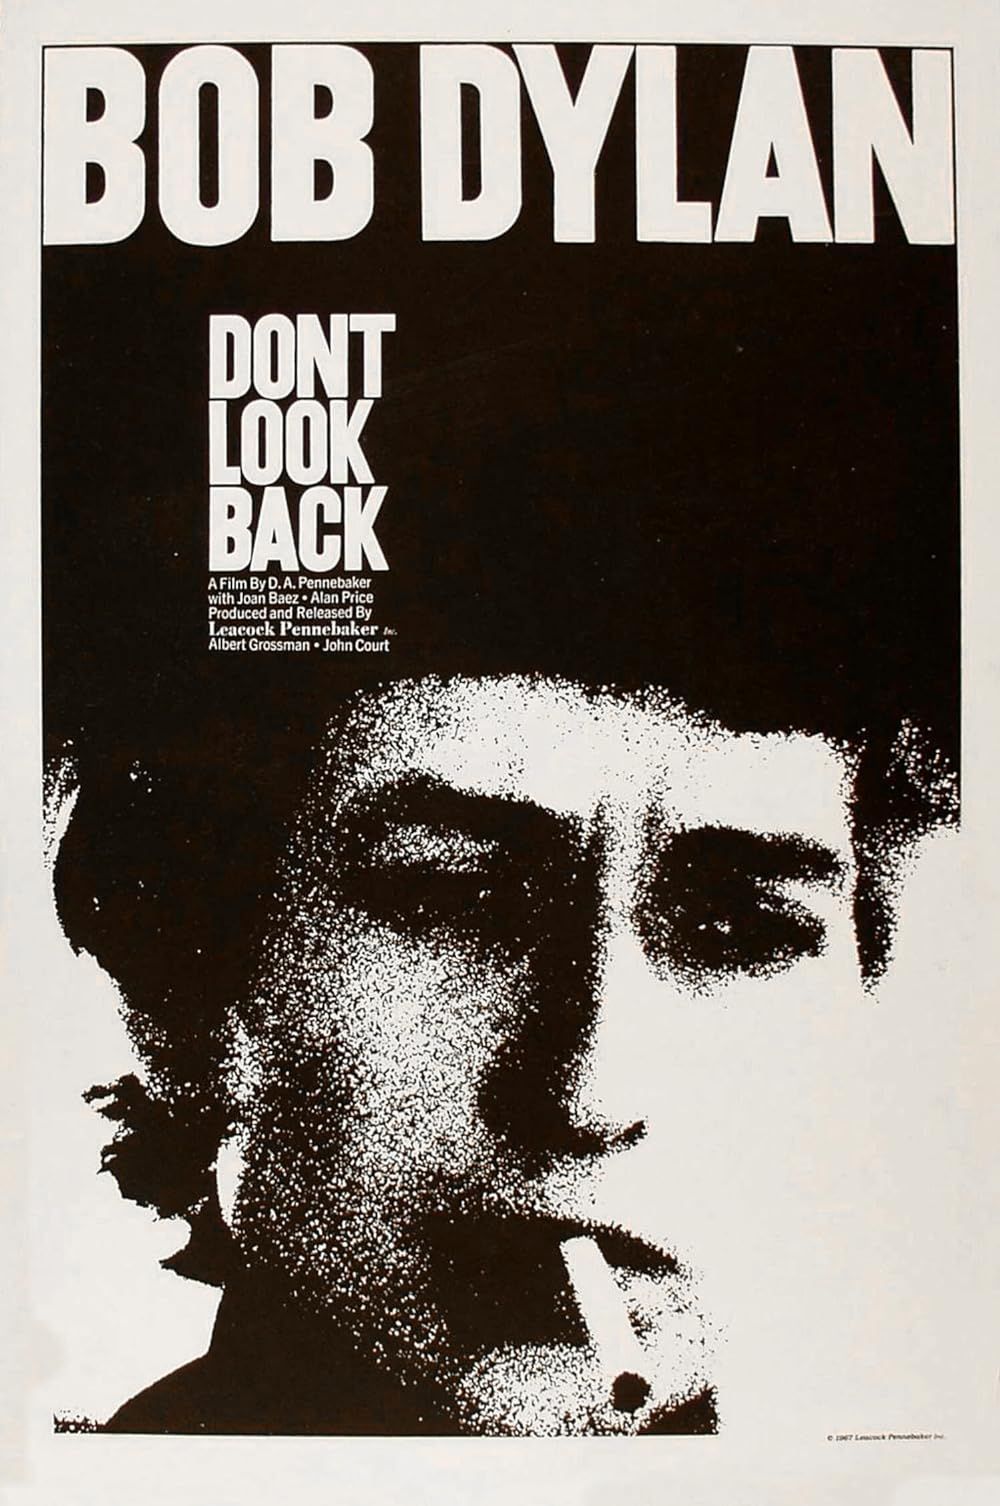 Bob Dylan in Bob Dylan- Dont Look Back (1967)